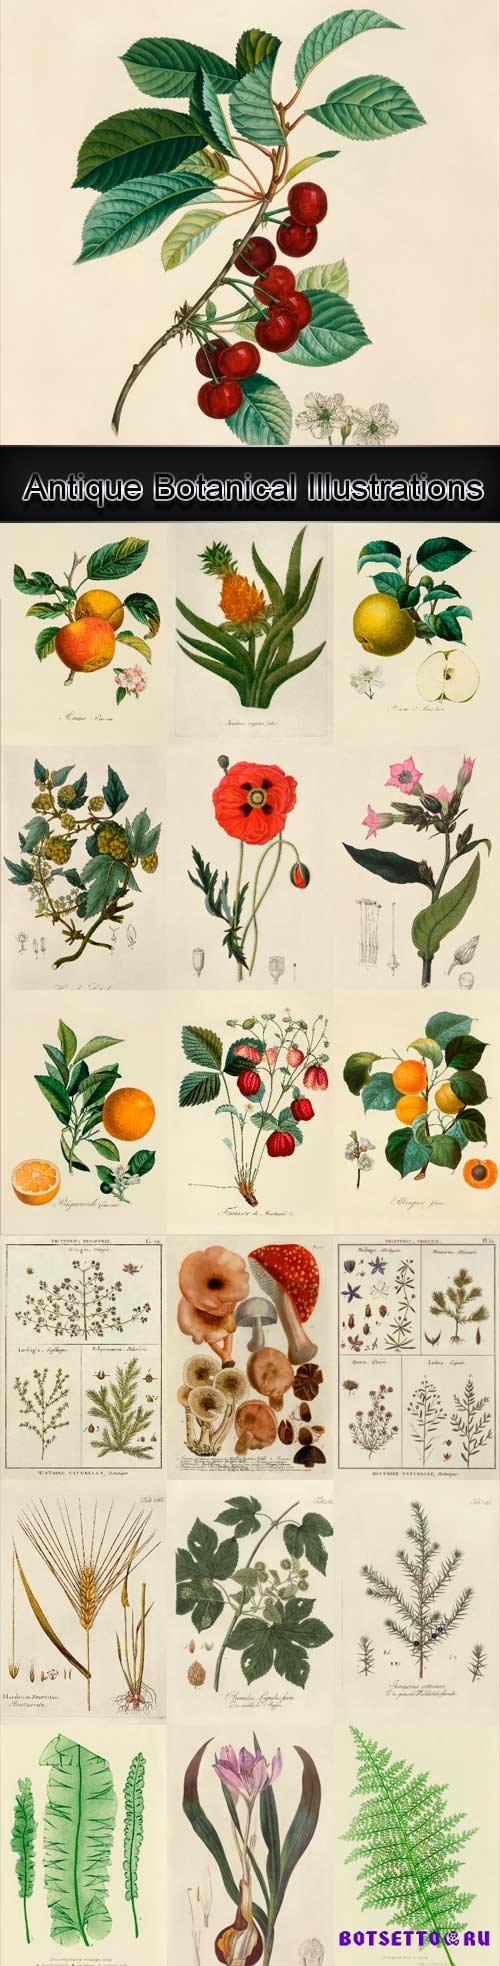 Antique Botanical Illustrations 1640-1900